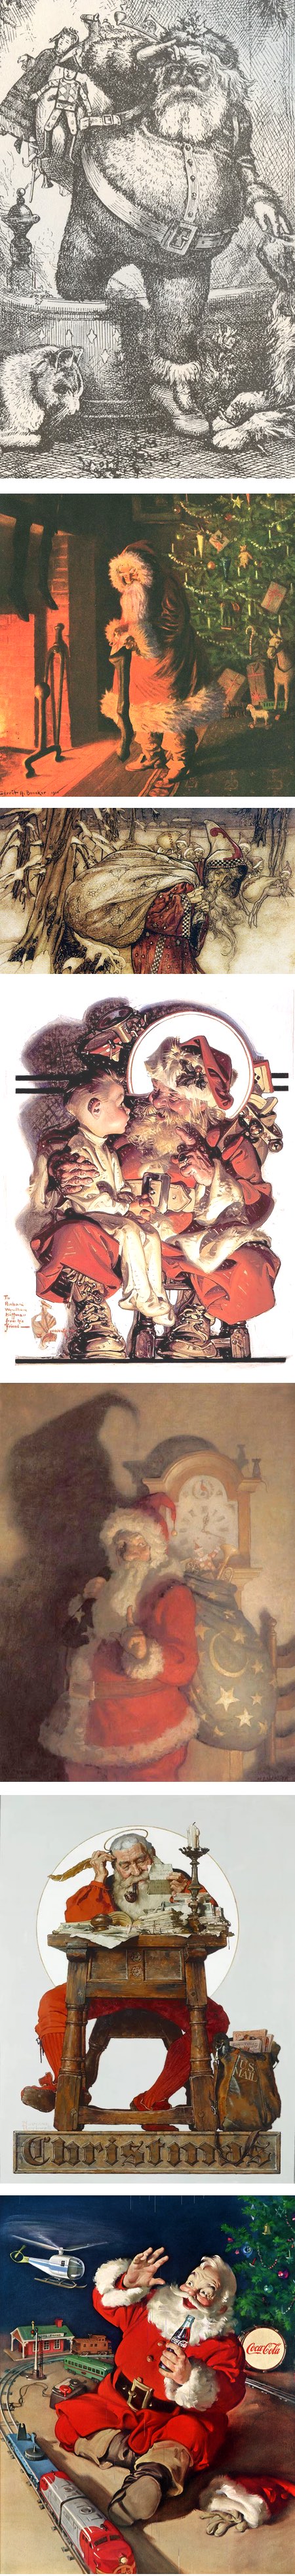 Santa Claus illustrations by Thomas Nast, Reginald Marsh, Arthur Rackham, J.C. Leyendecker, N.C. Wyeth, Norman Rockwell and Haddon Sundblom